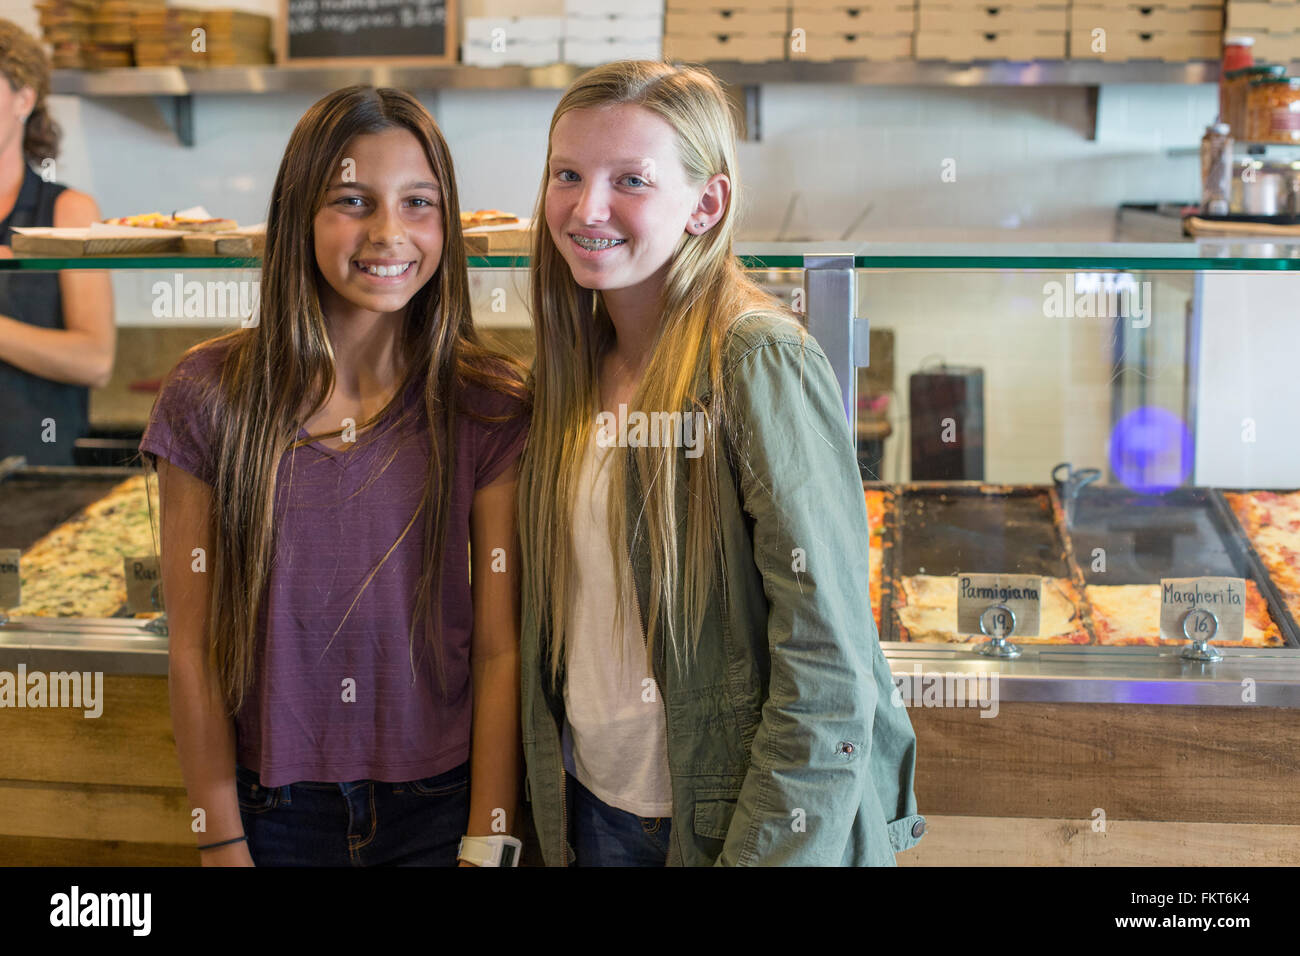 Girls smiling in cafe Banque D'Images